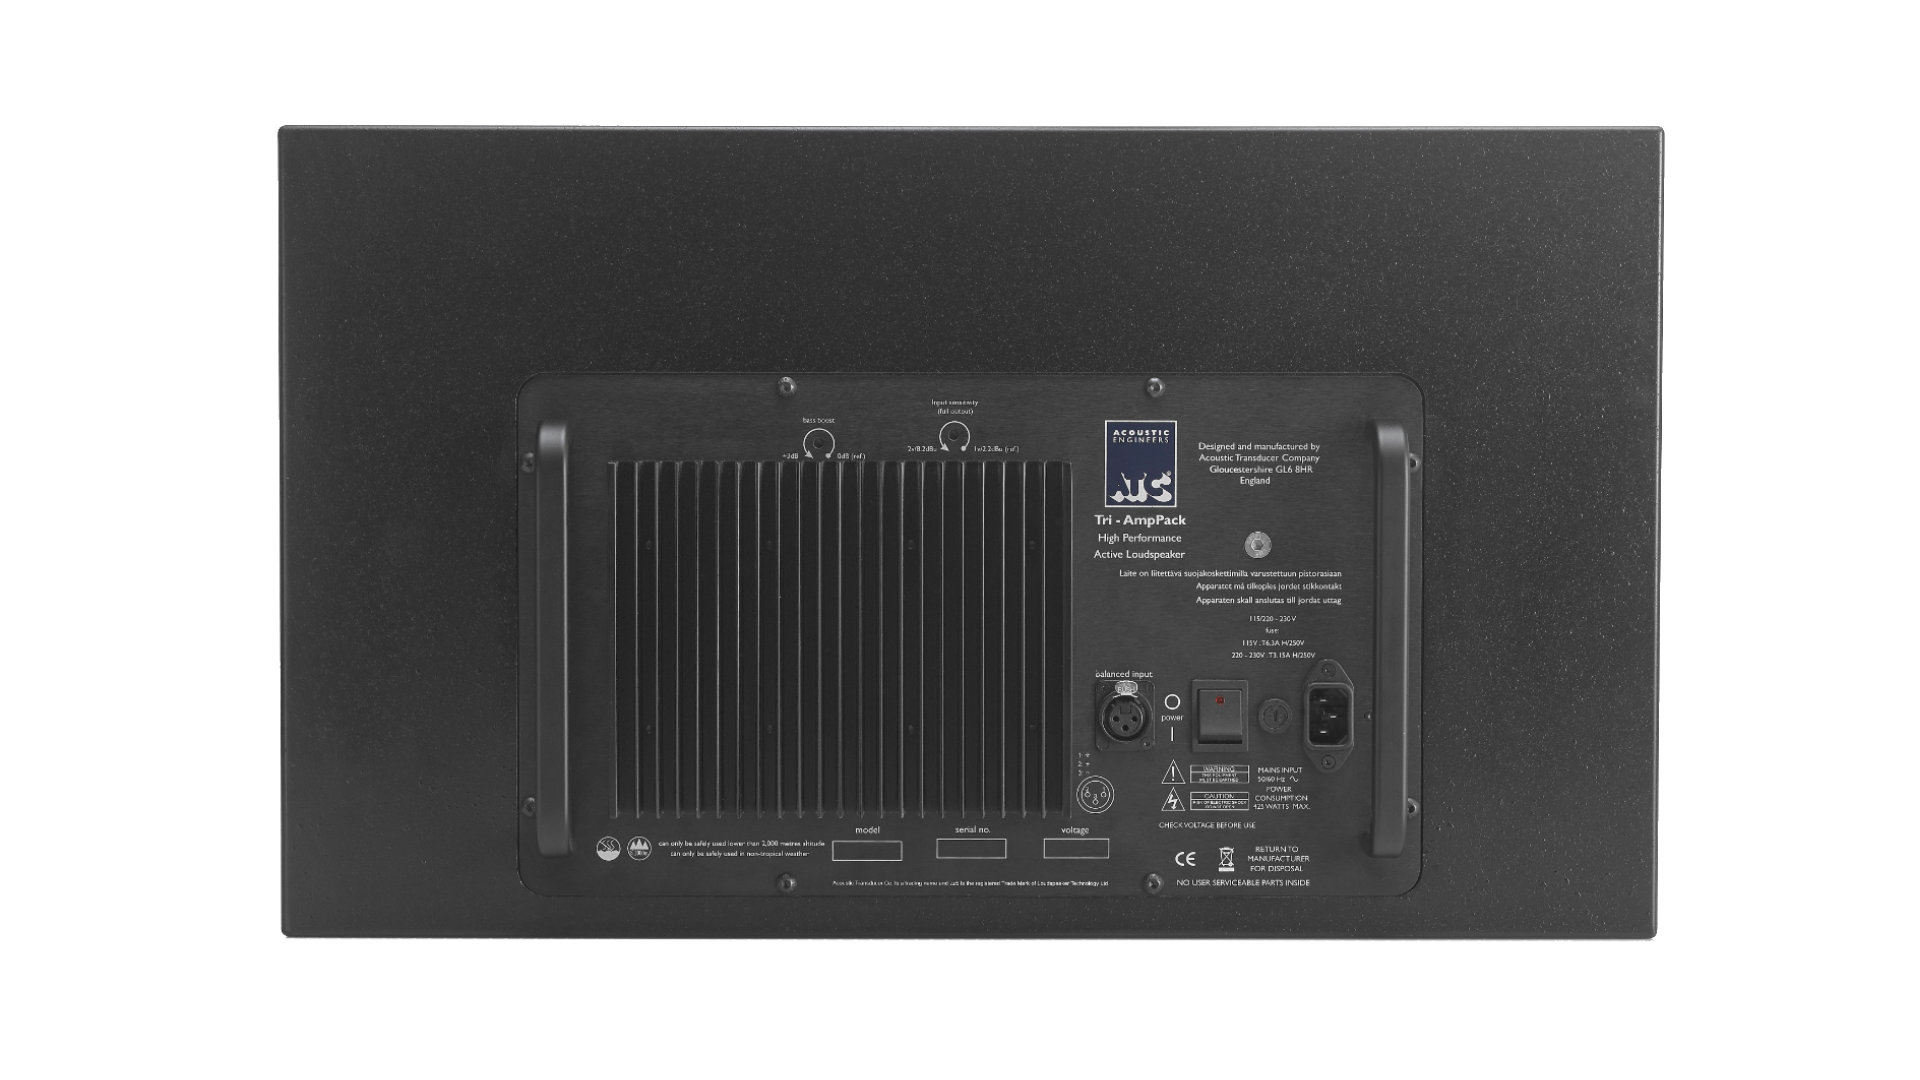 Monitor studyjny bliskiego pola ATC Loudspeakers SCM45A Pro